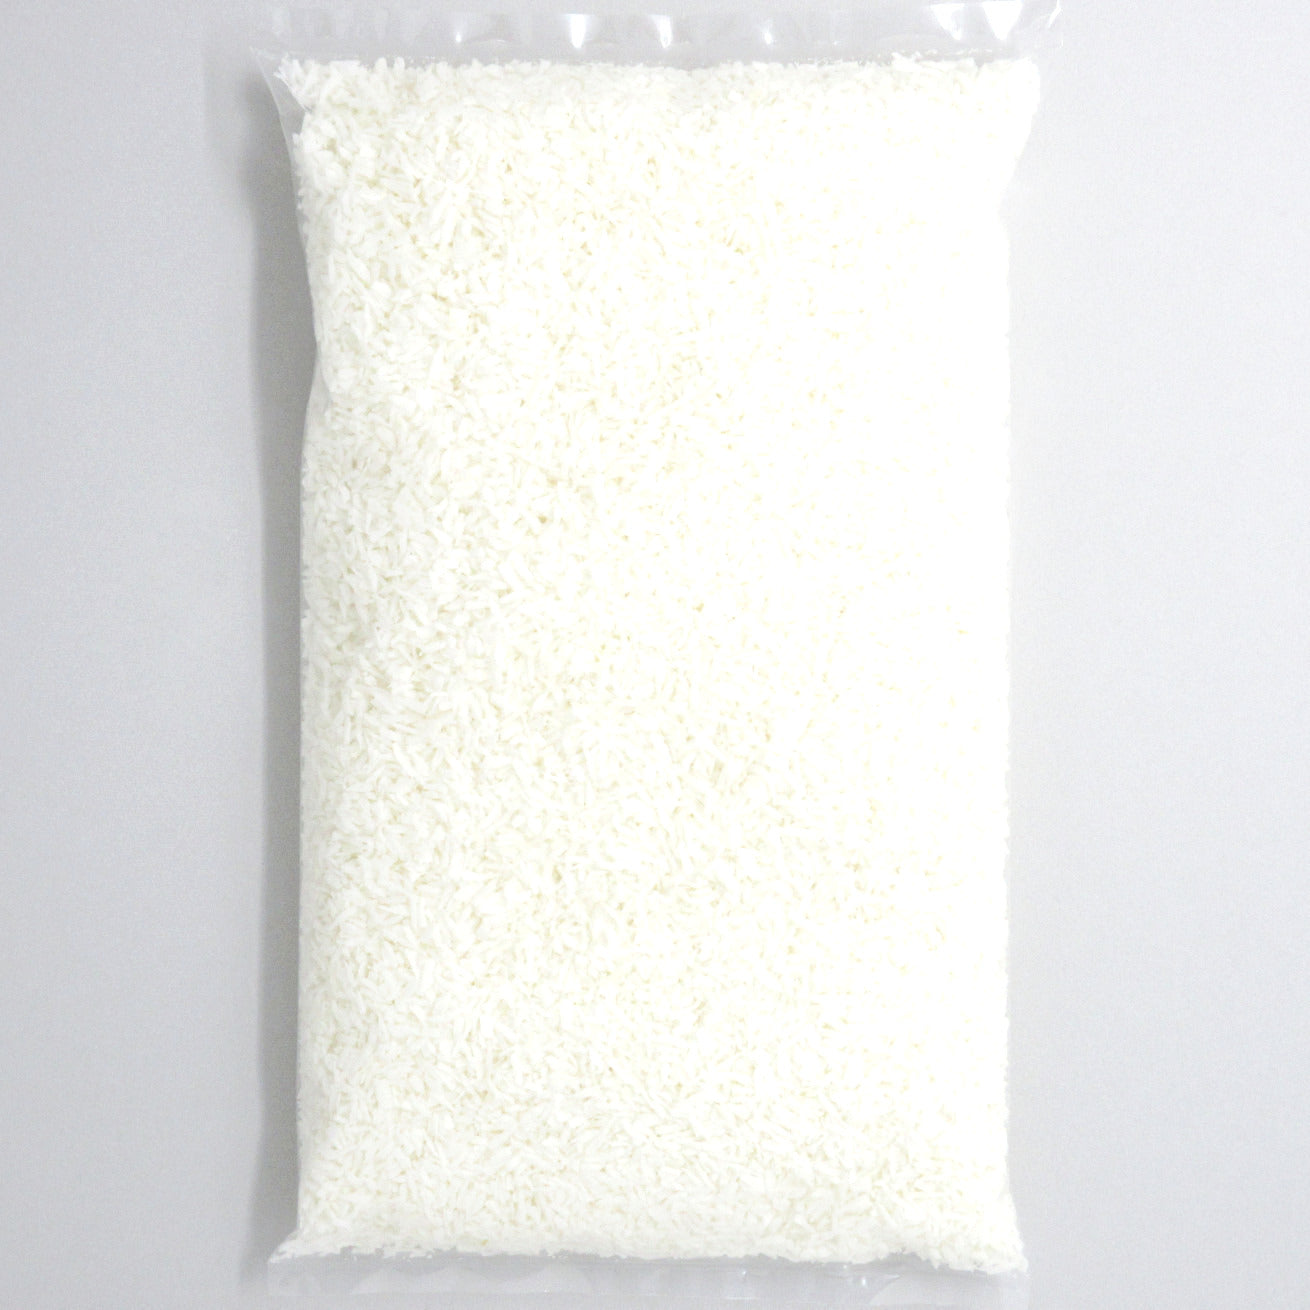 Flour Barrel product image - Organic Coconut